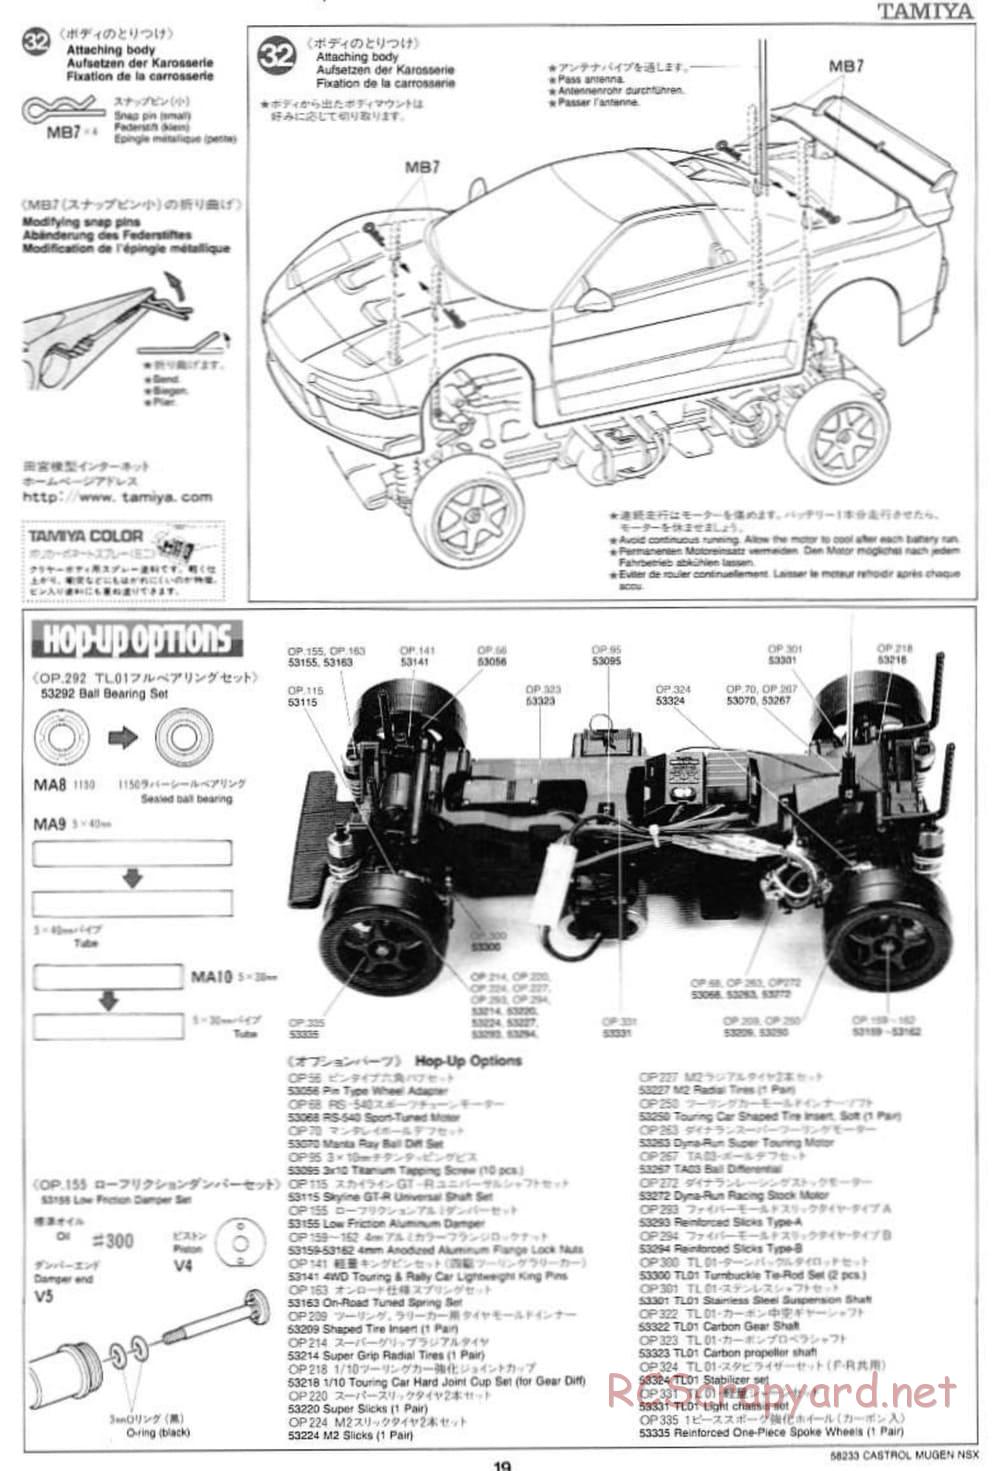 Tamiya - Castrol Mugen NSX - TL-01 Chassis - Manual - Page 19